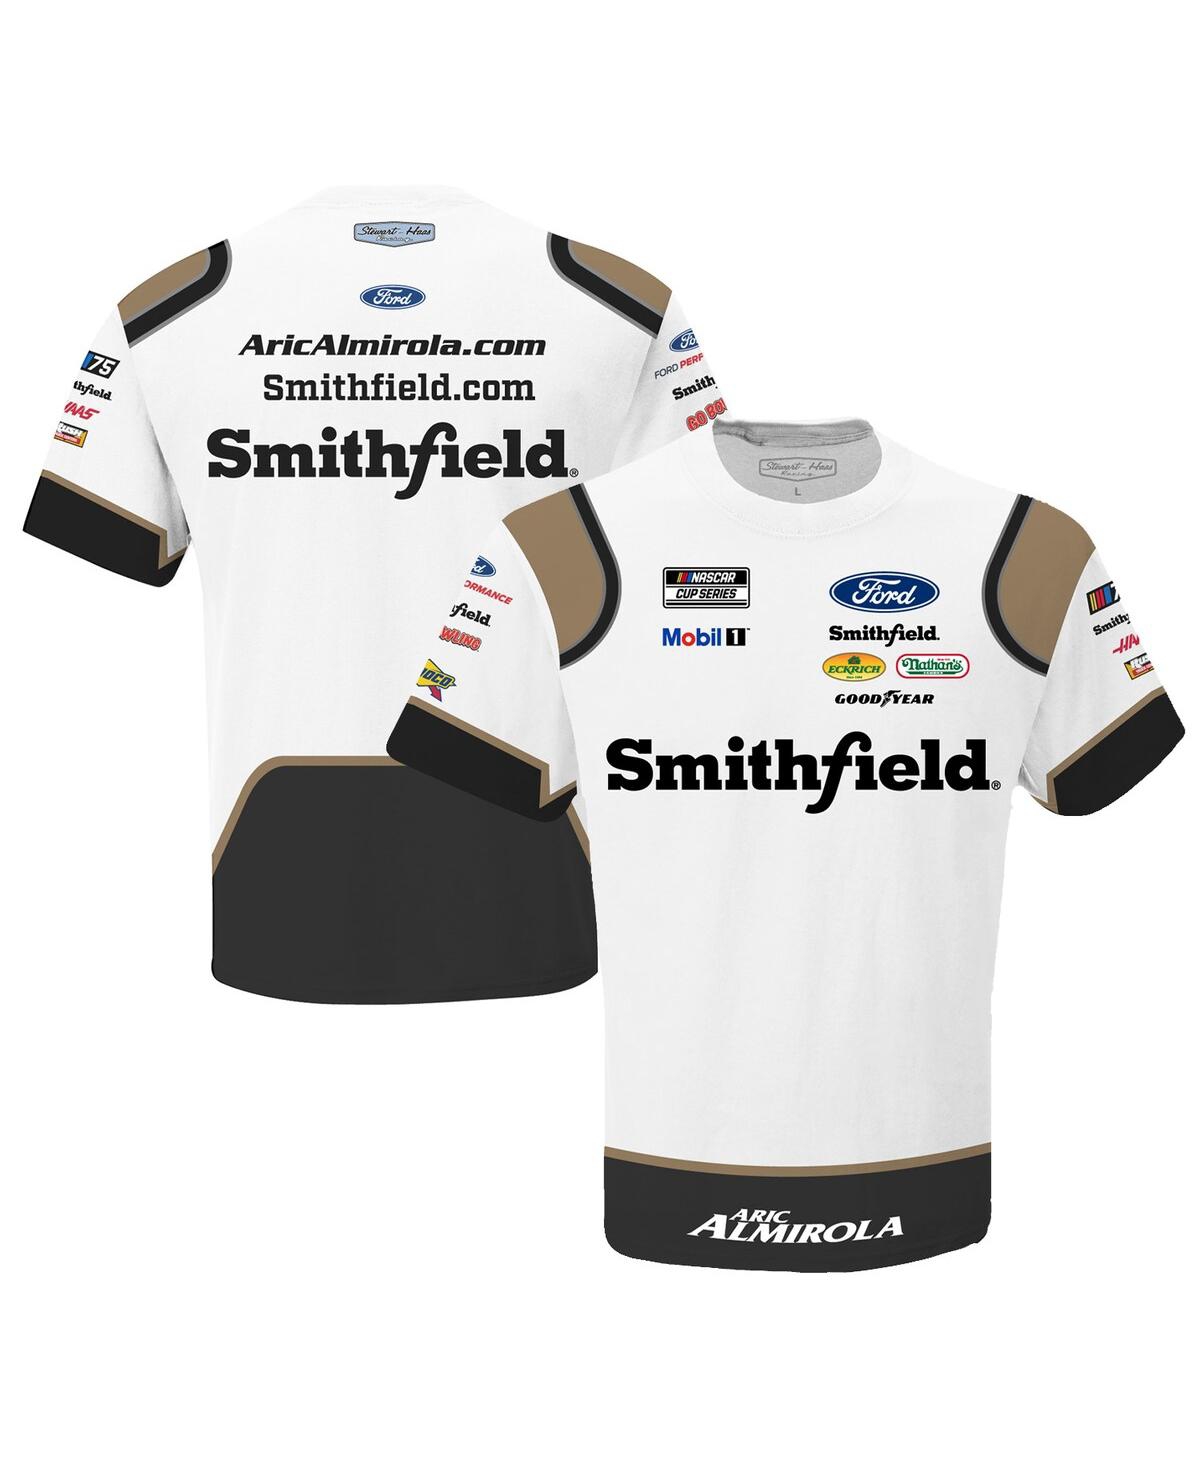 Men's Stewart-Haas Racing Team Collection White Aric Almirola Smithfield Sublimated Team Uniform T-shirt - White